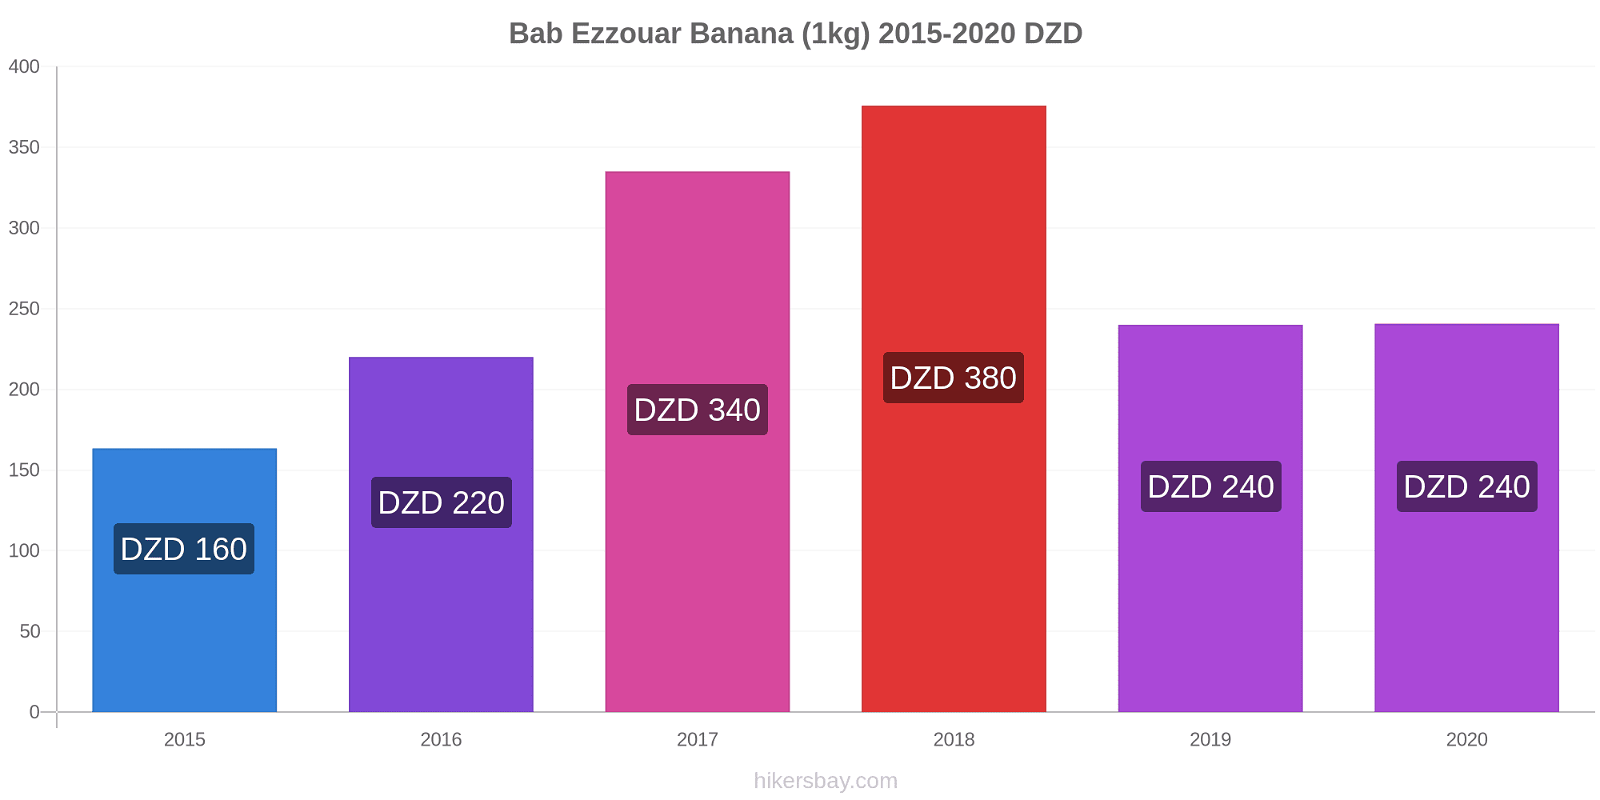 Bab Ezzouar modificări de preț Banana (1kg) hikersbay.com